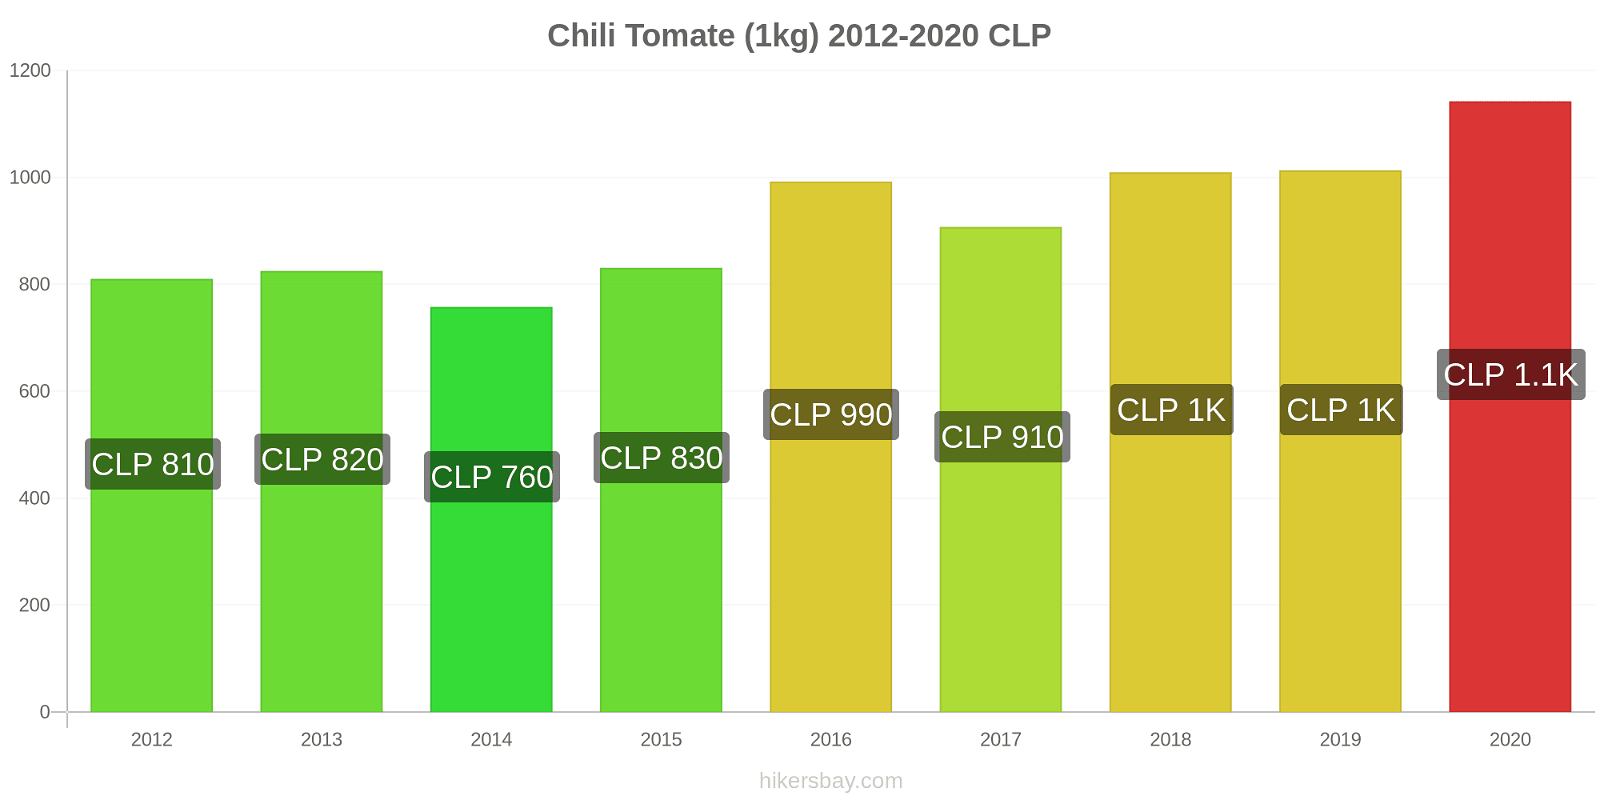 Chili changements de prix Tomate (1kg) hikersbay.com